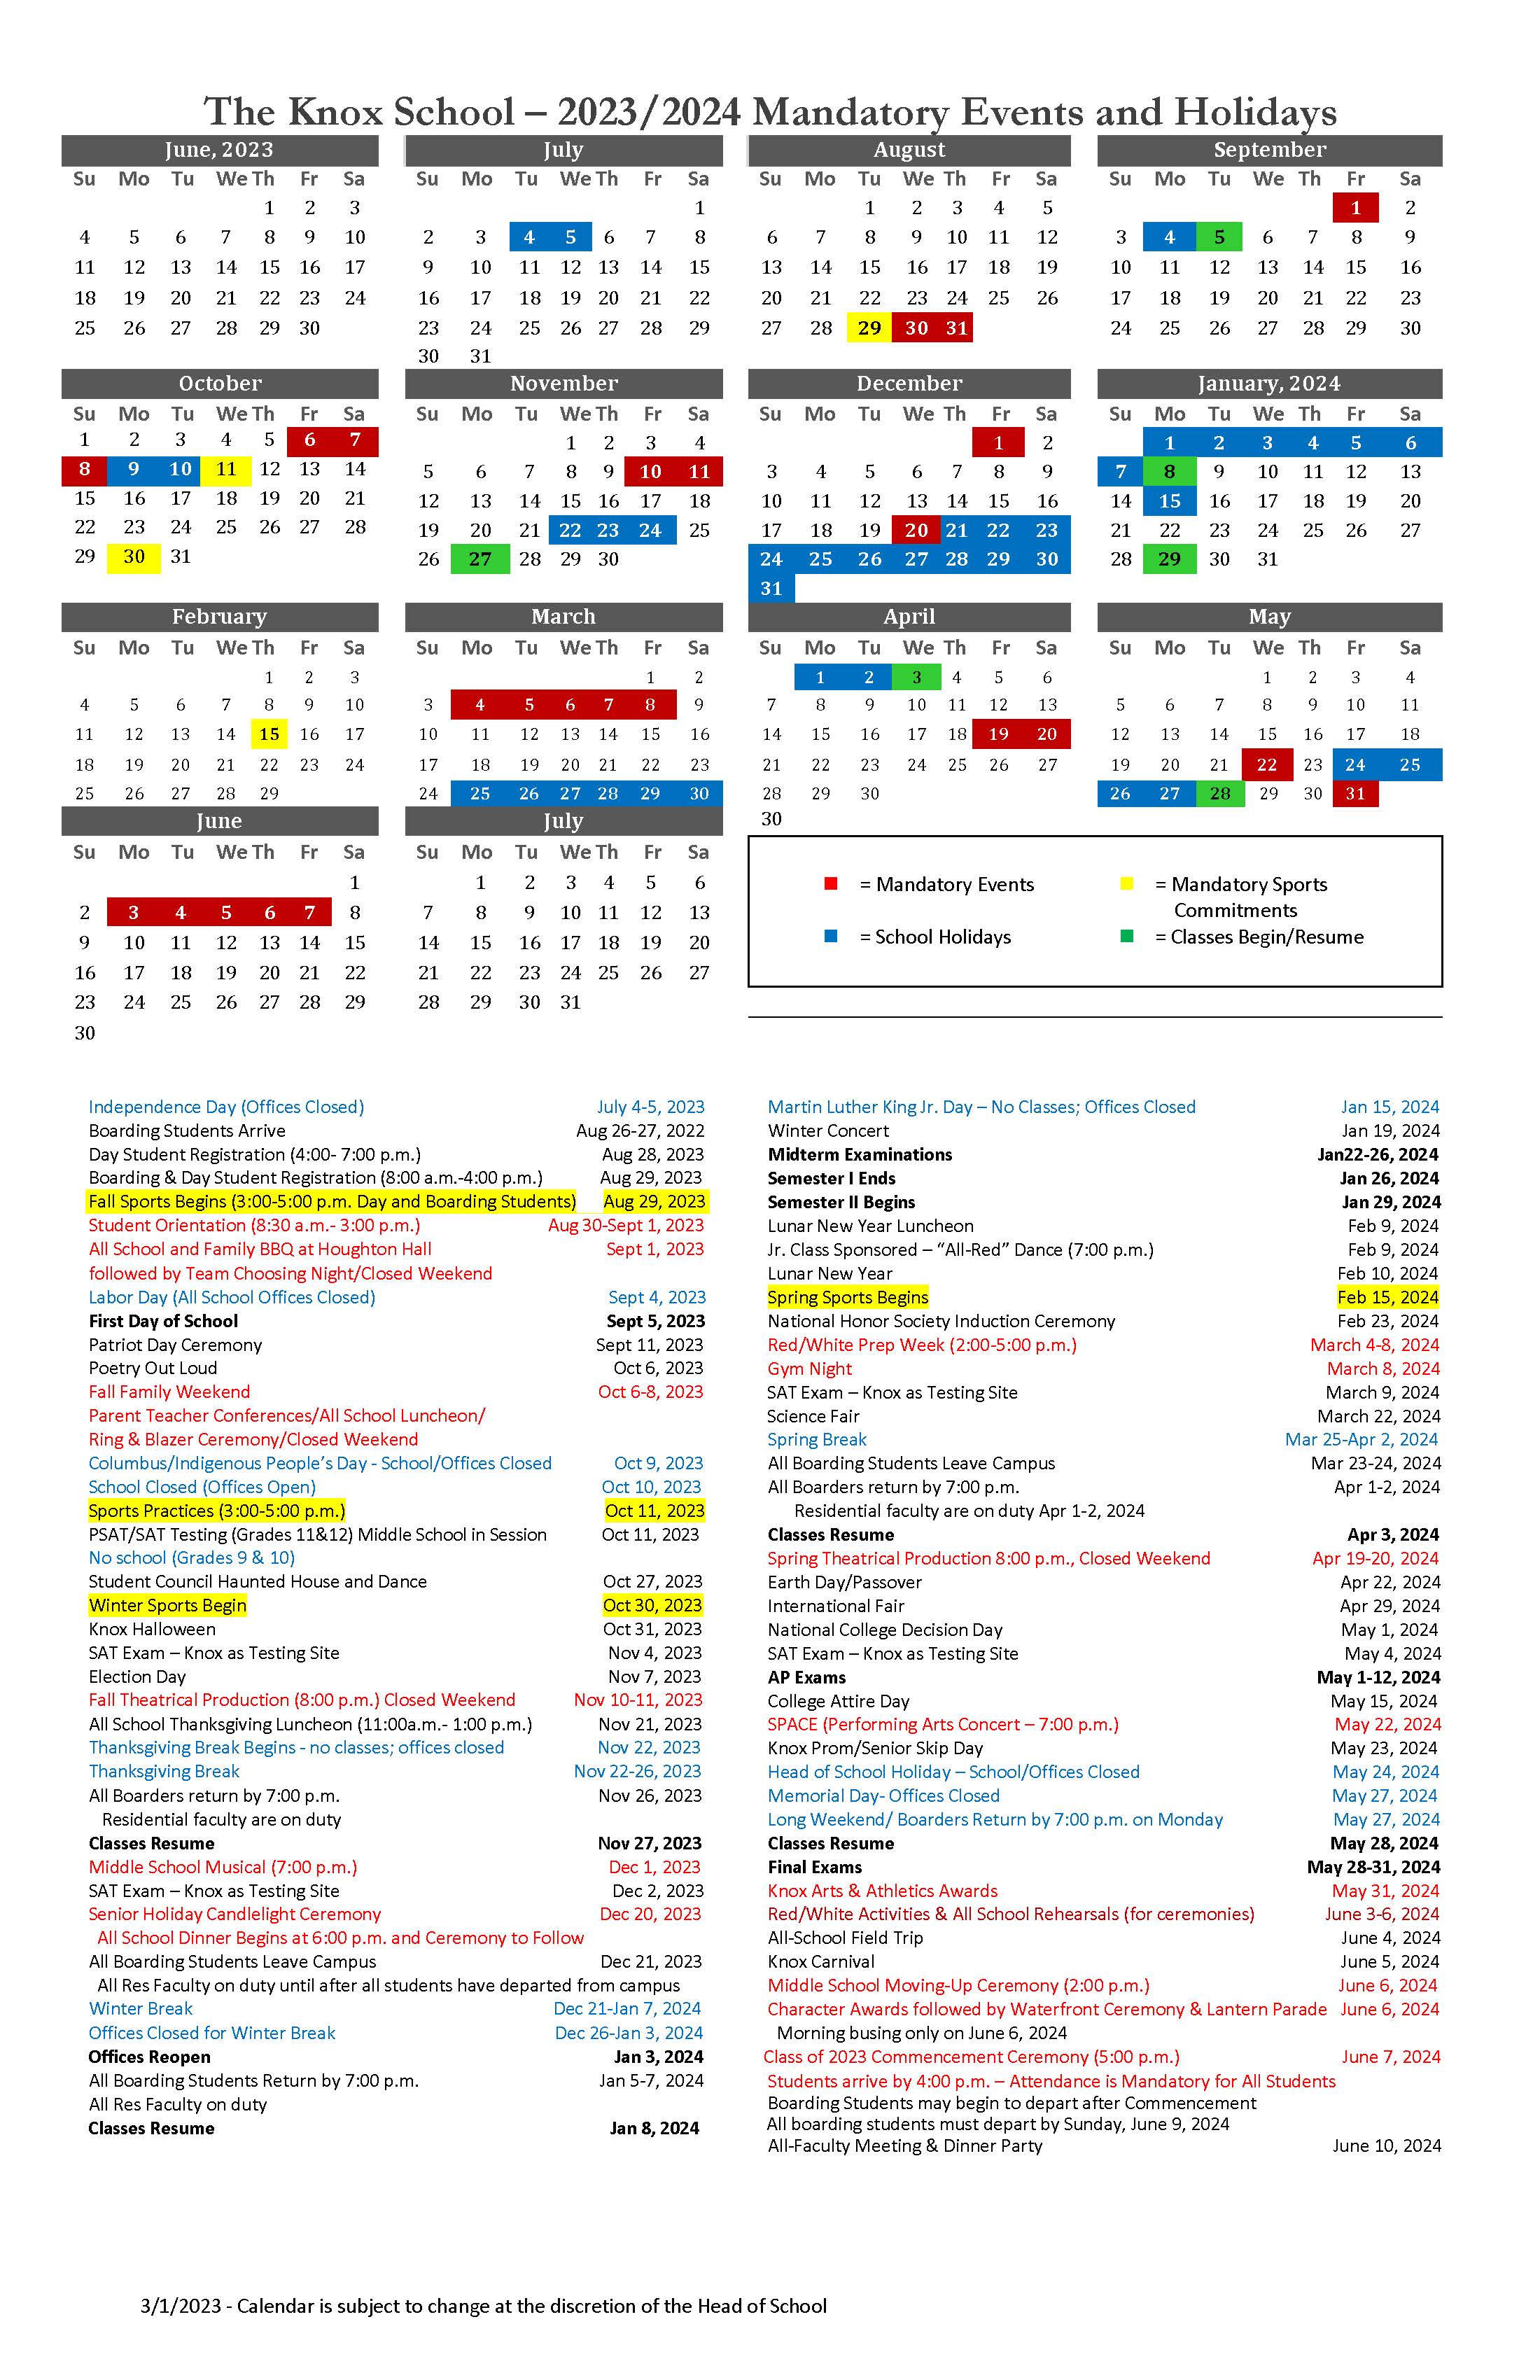 Knox School Calendar 2023-2024